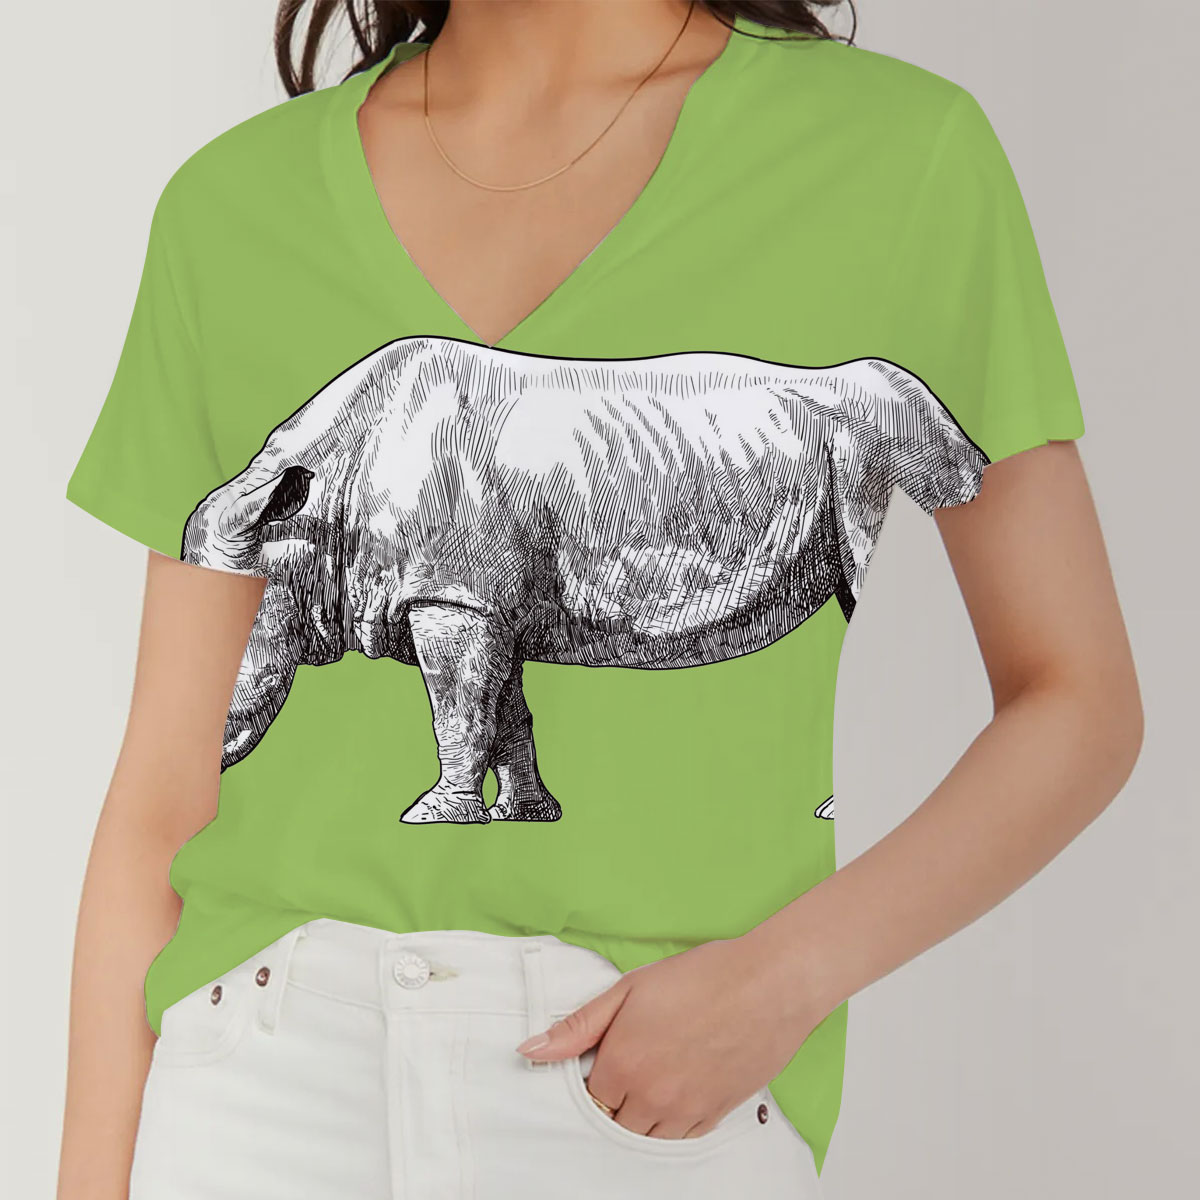 Drawing Of Rhino V-Neck Women's T-Shirt_1_2.1